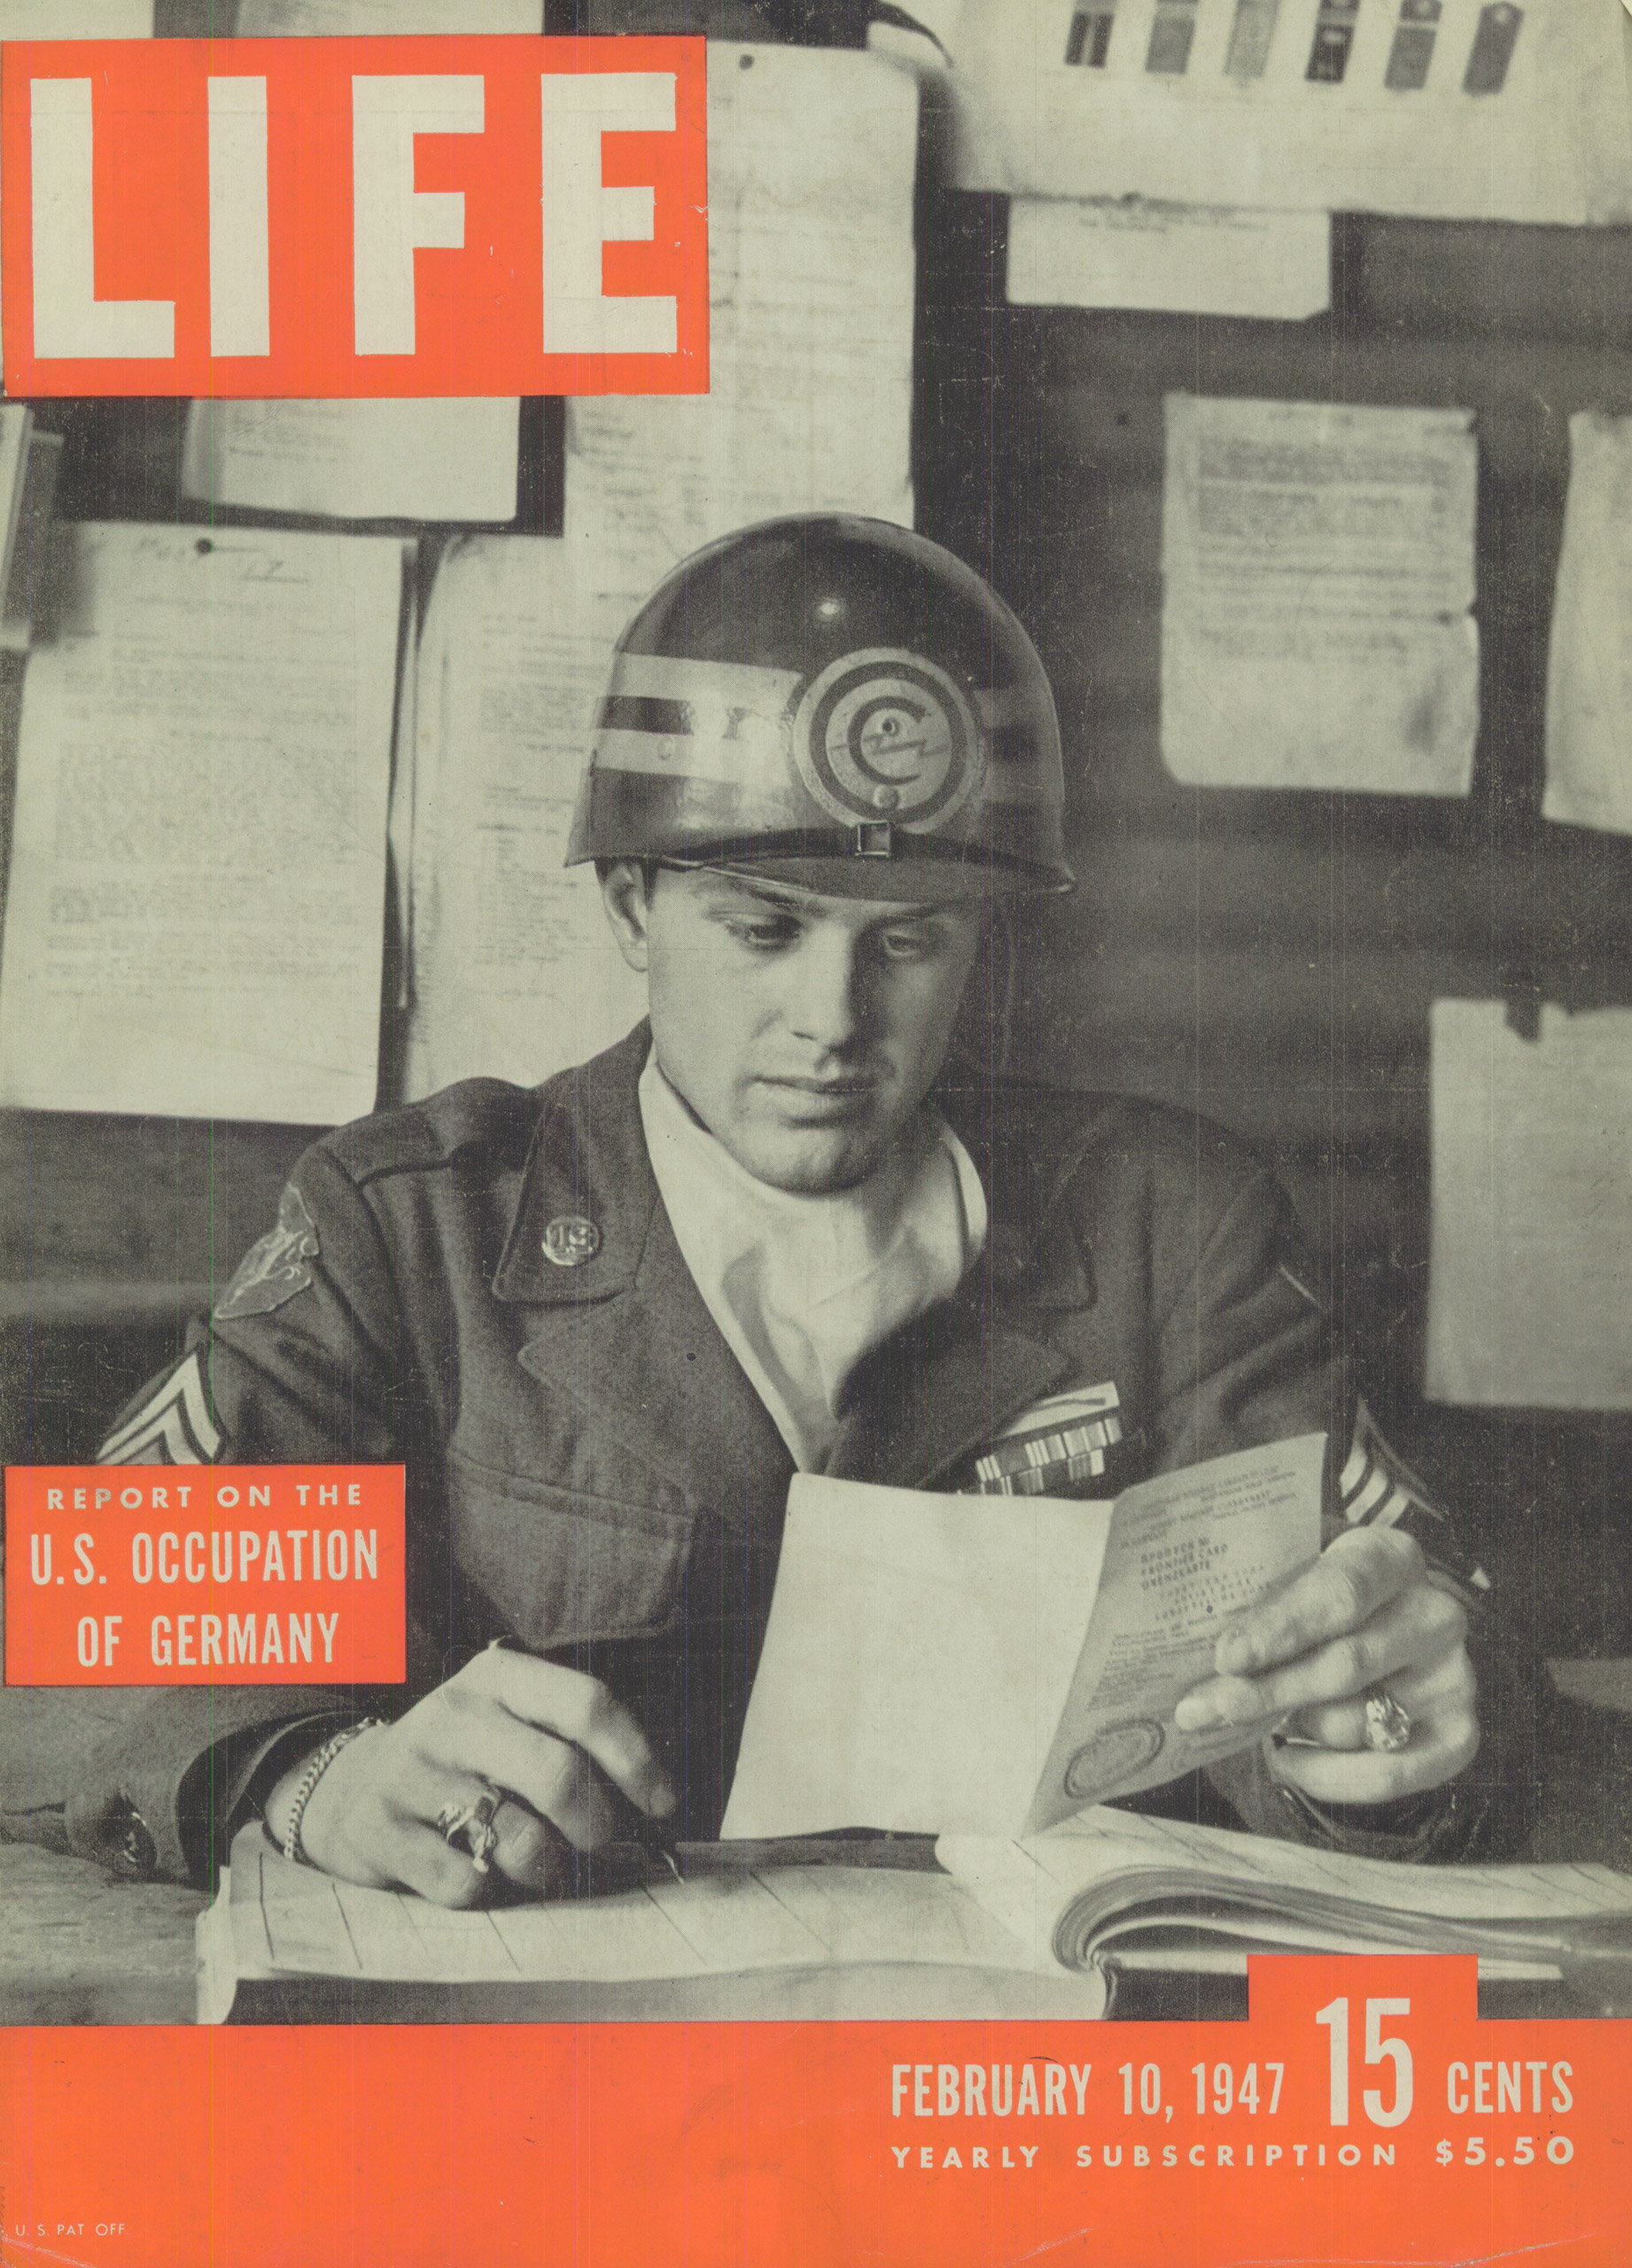 Feb. 10, 1947 cover of LIFE magazine.